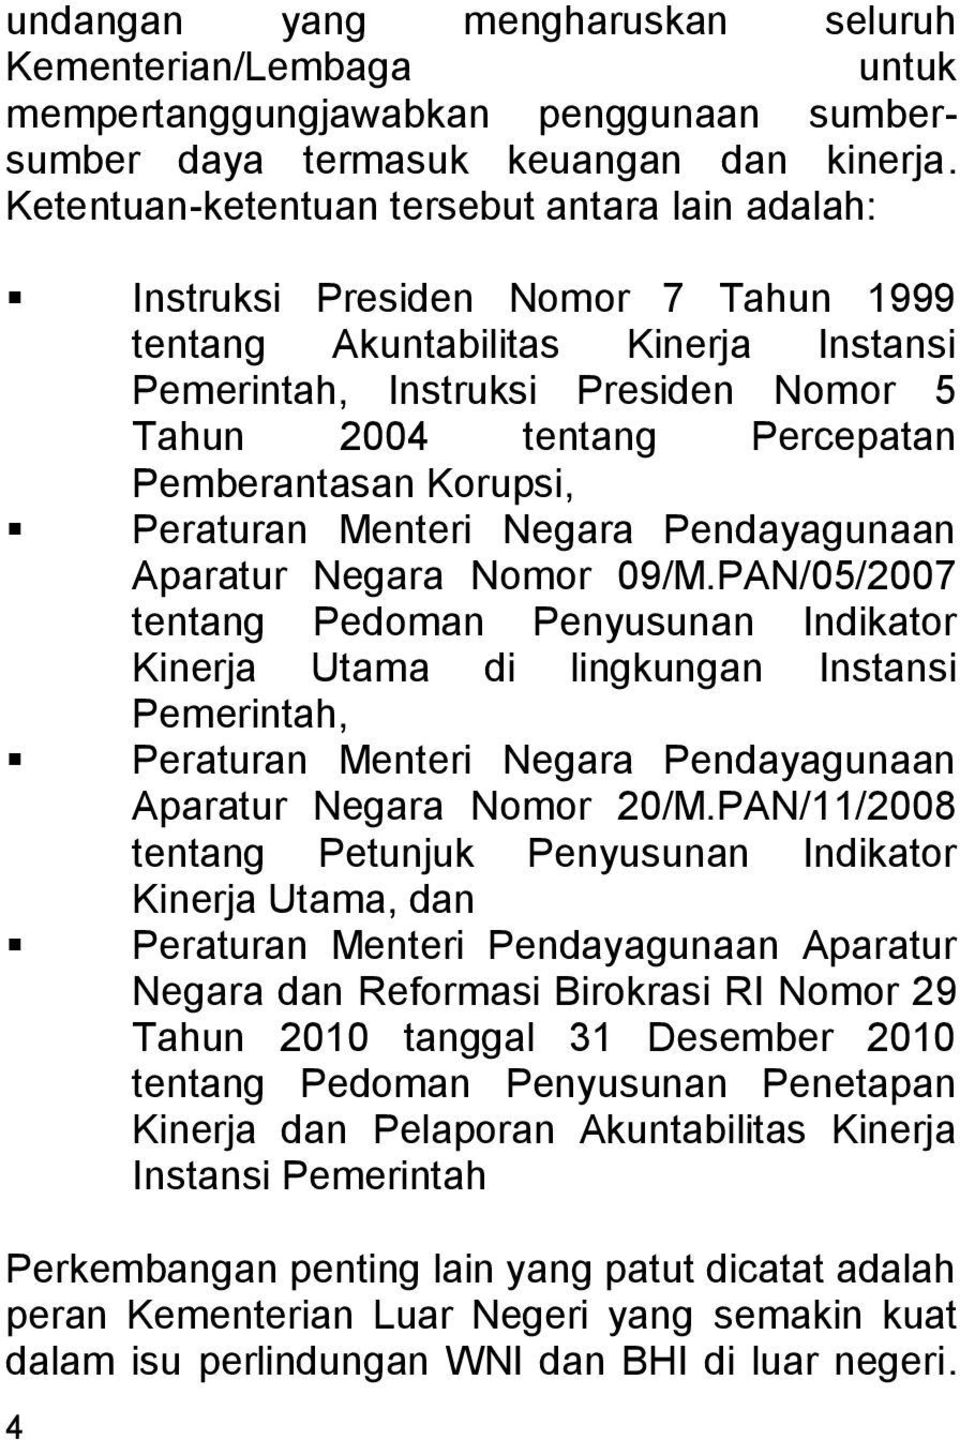 Pemberantasan Korupsi, Peraturan Menteri Negara Pendayagunaan Aparatur Negara Nomor 09/M.